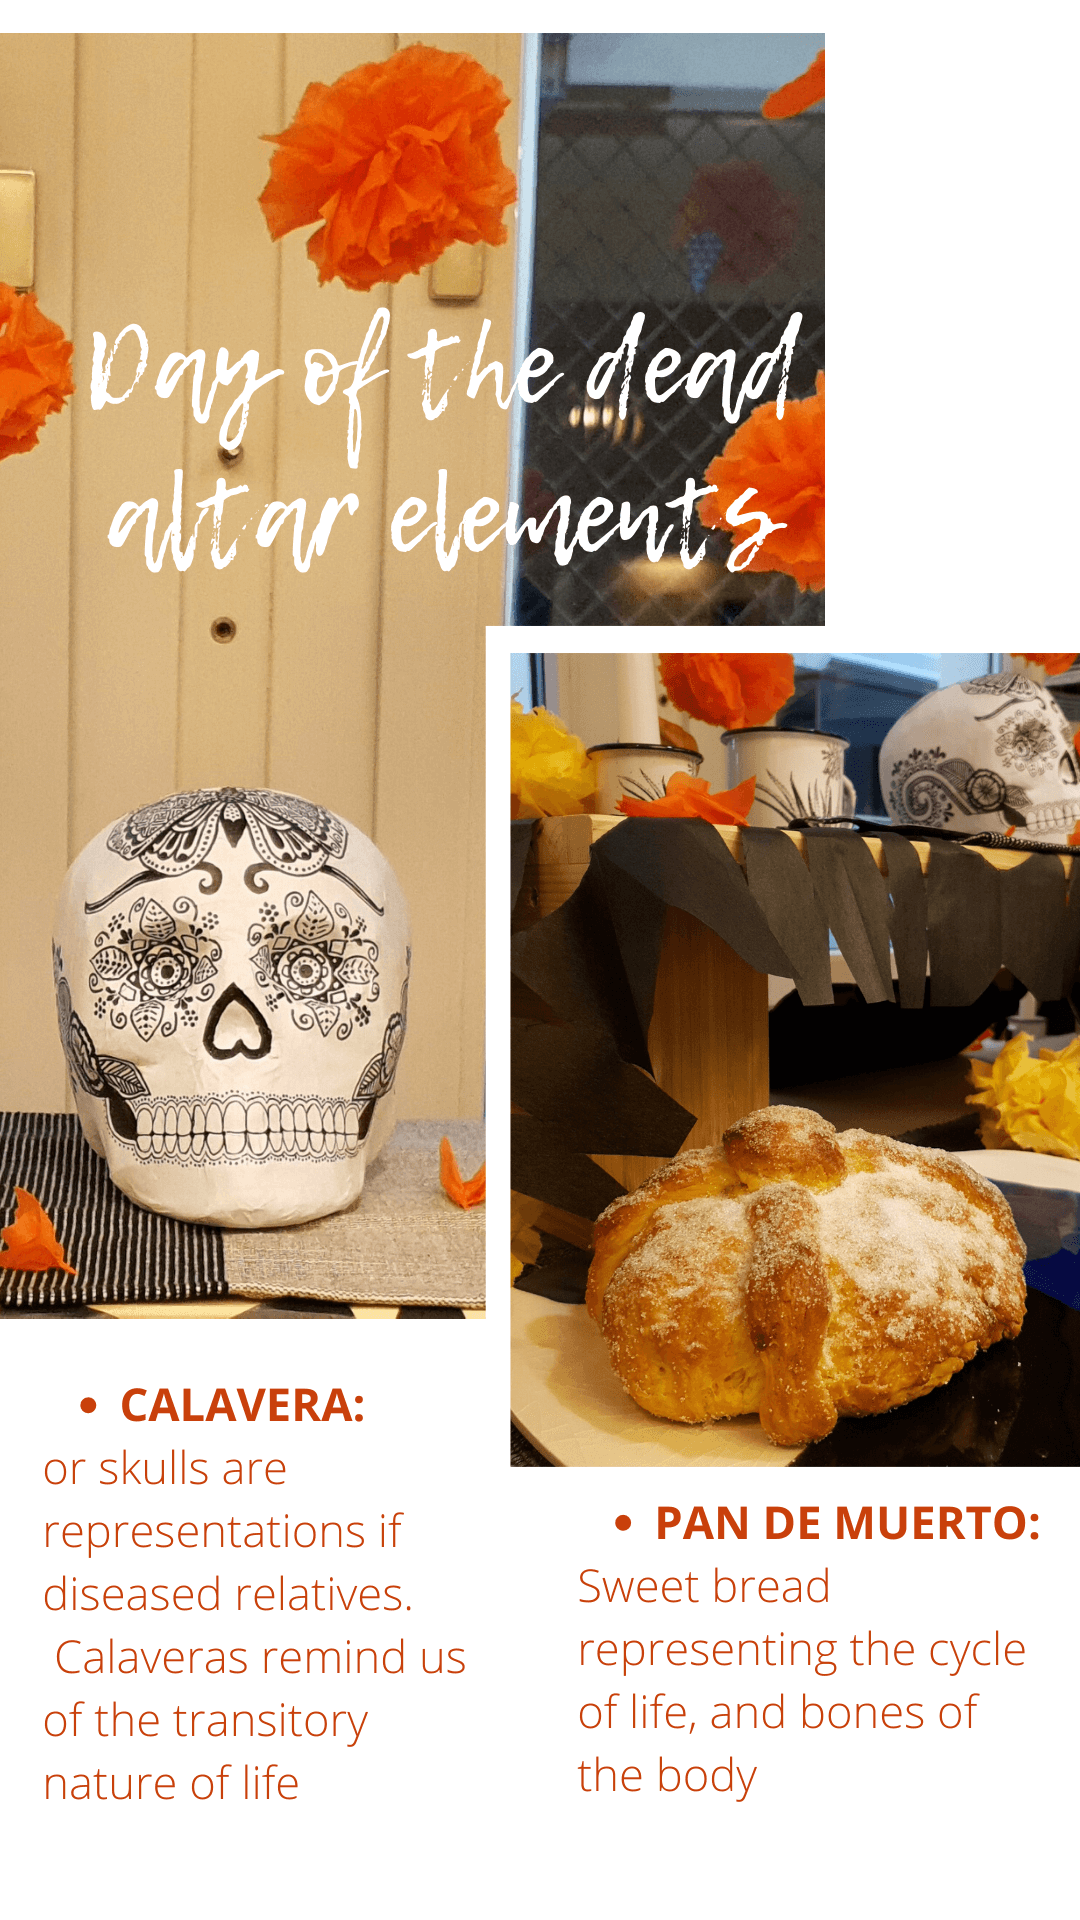 Day of the dead altar elements, calavera, pan de muerto